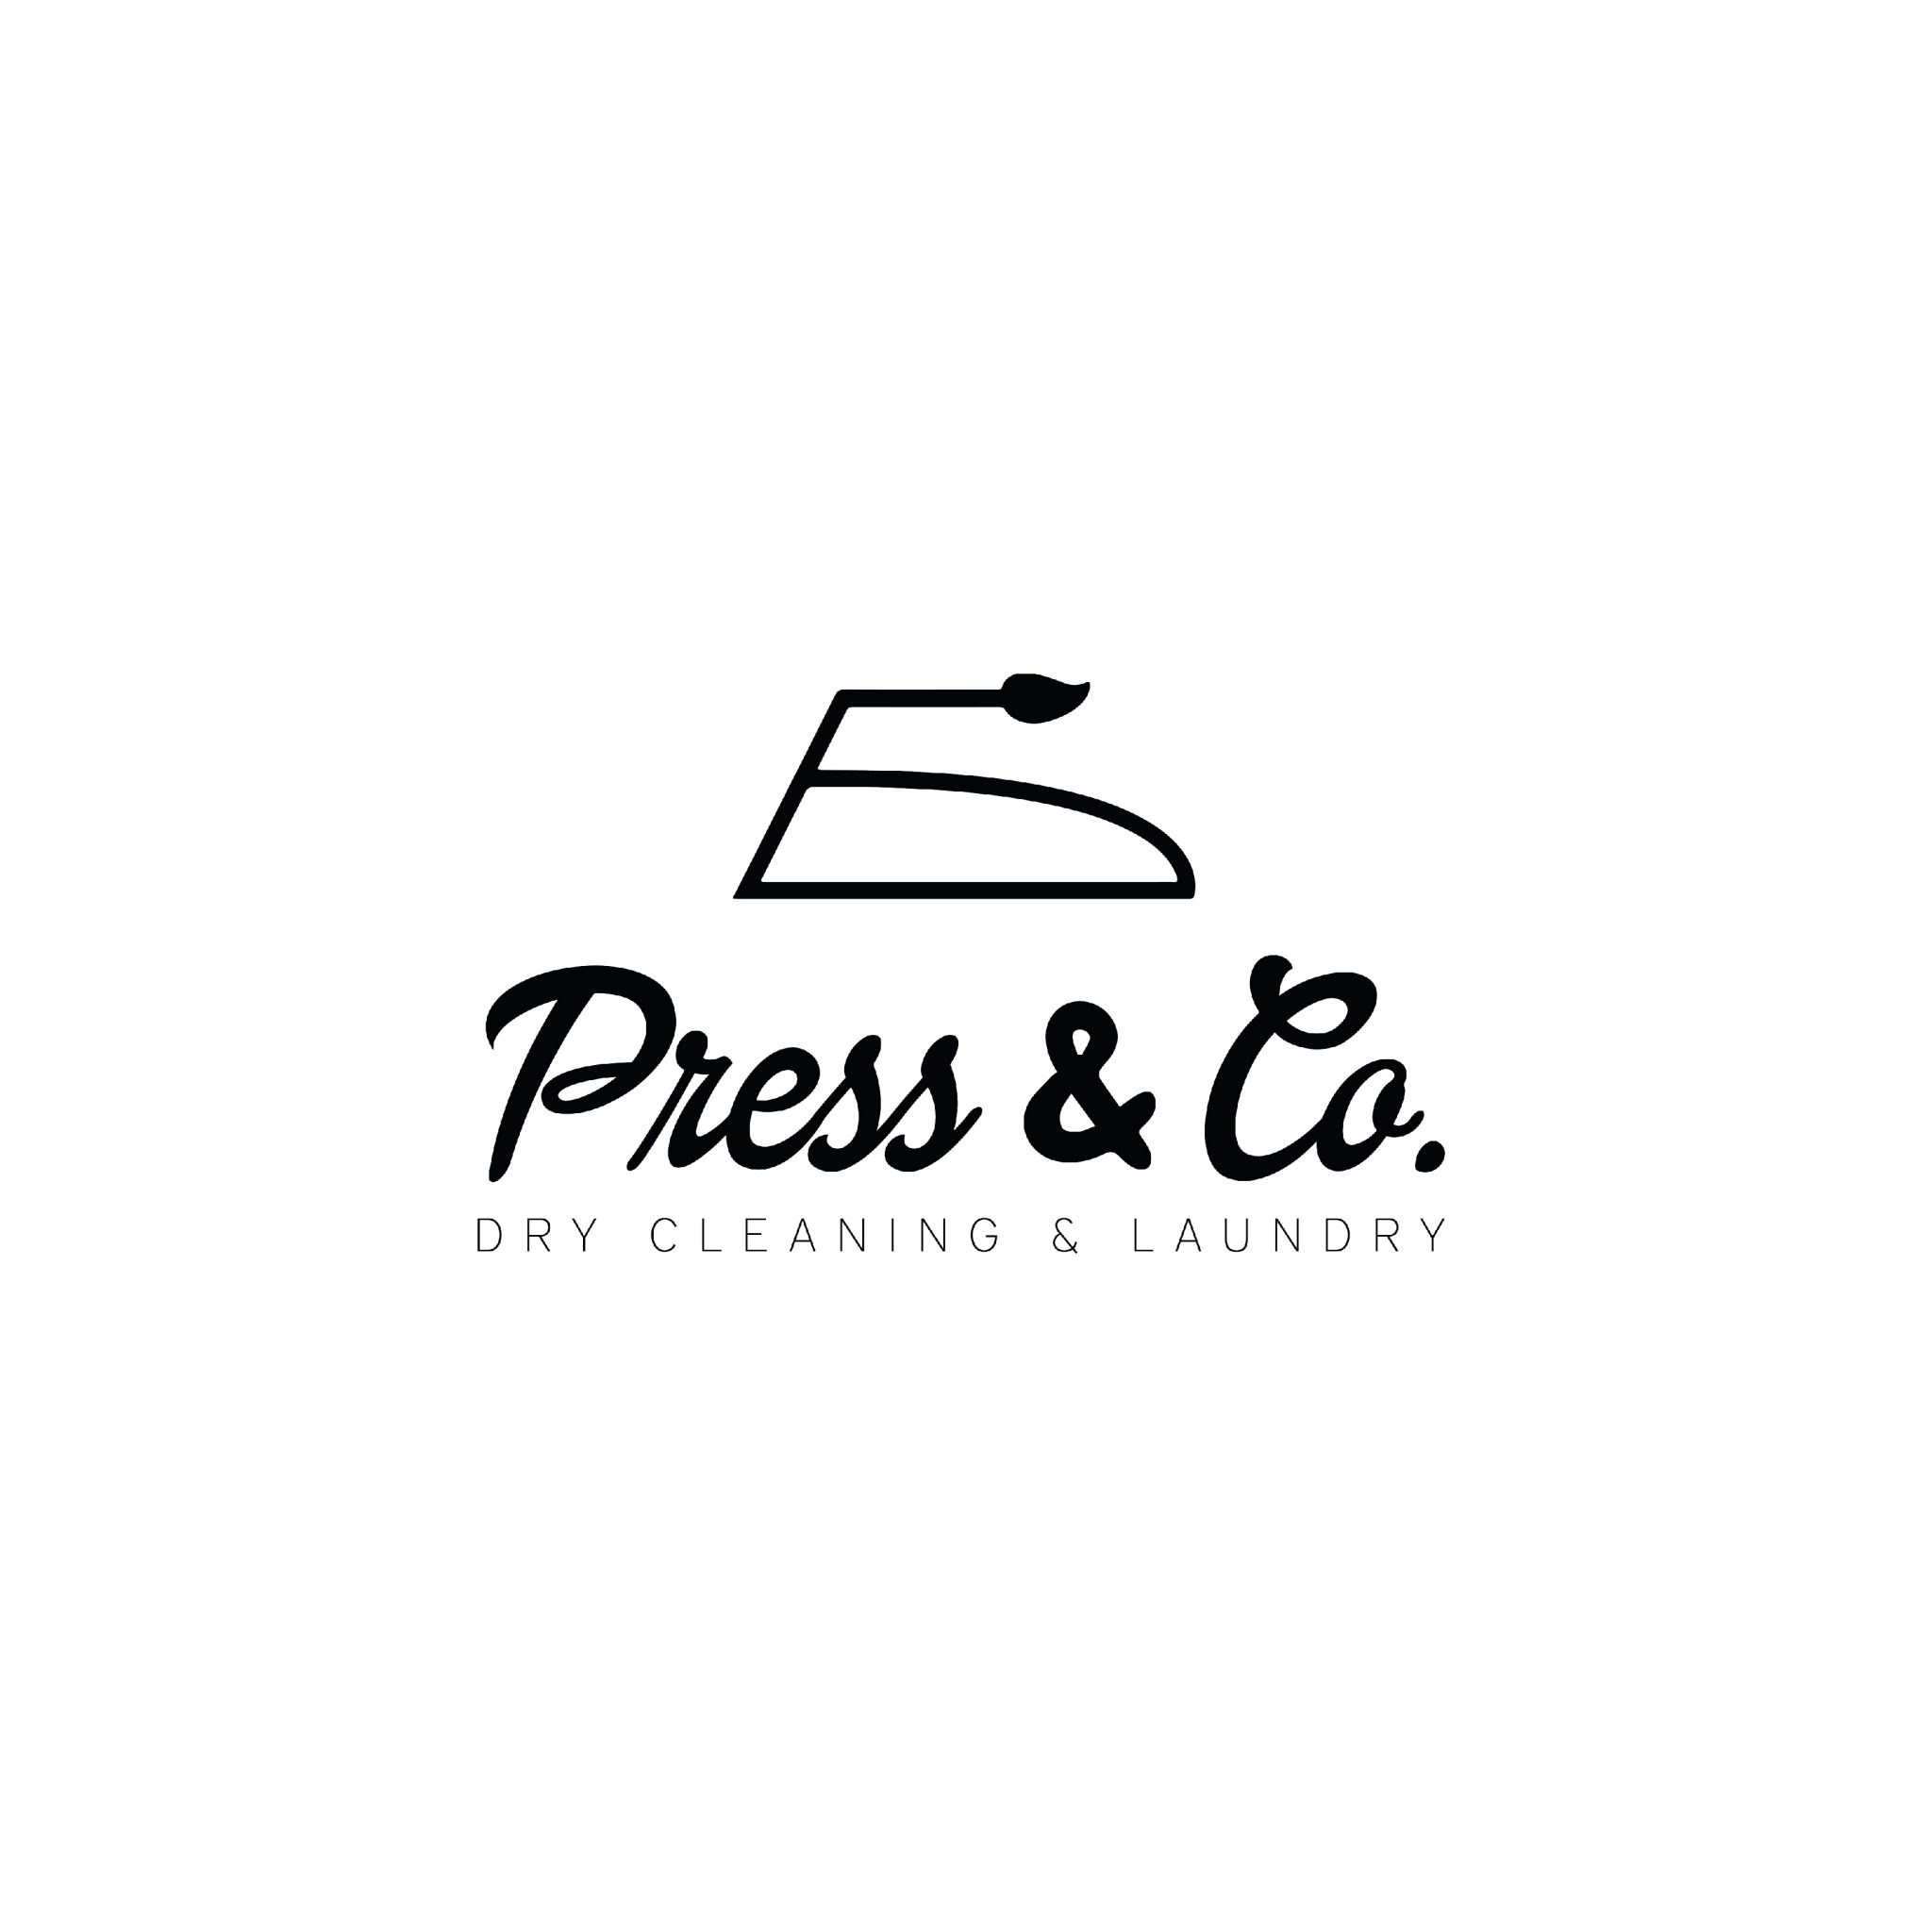 Press & Co